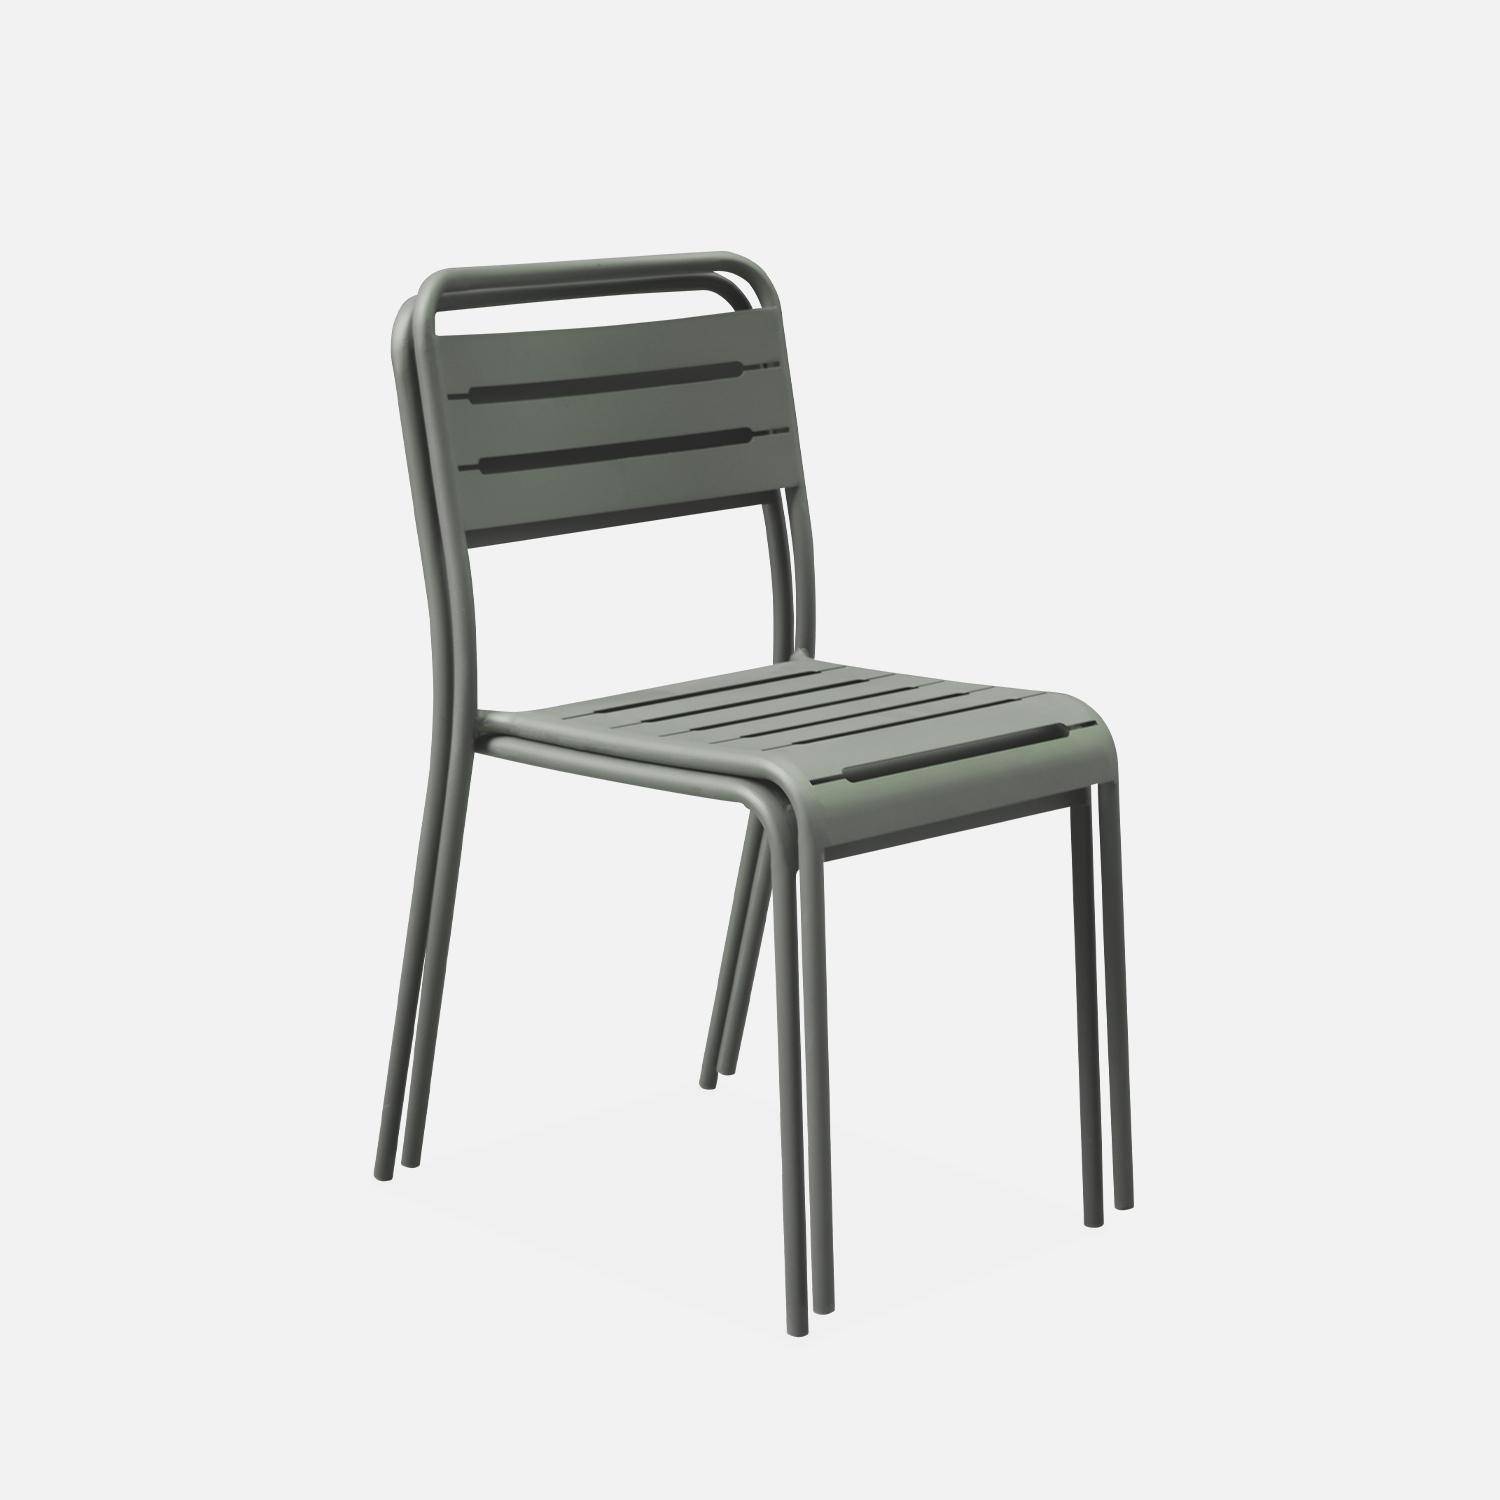 Pair of bistro steel garden chairs, stackable, W44xD52xH79cm, Khaki Green Photo5